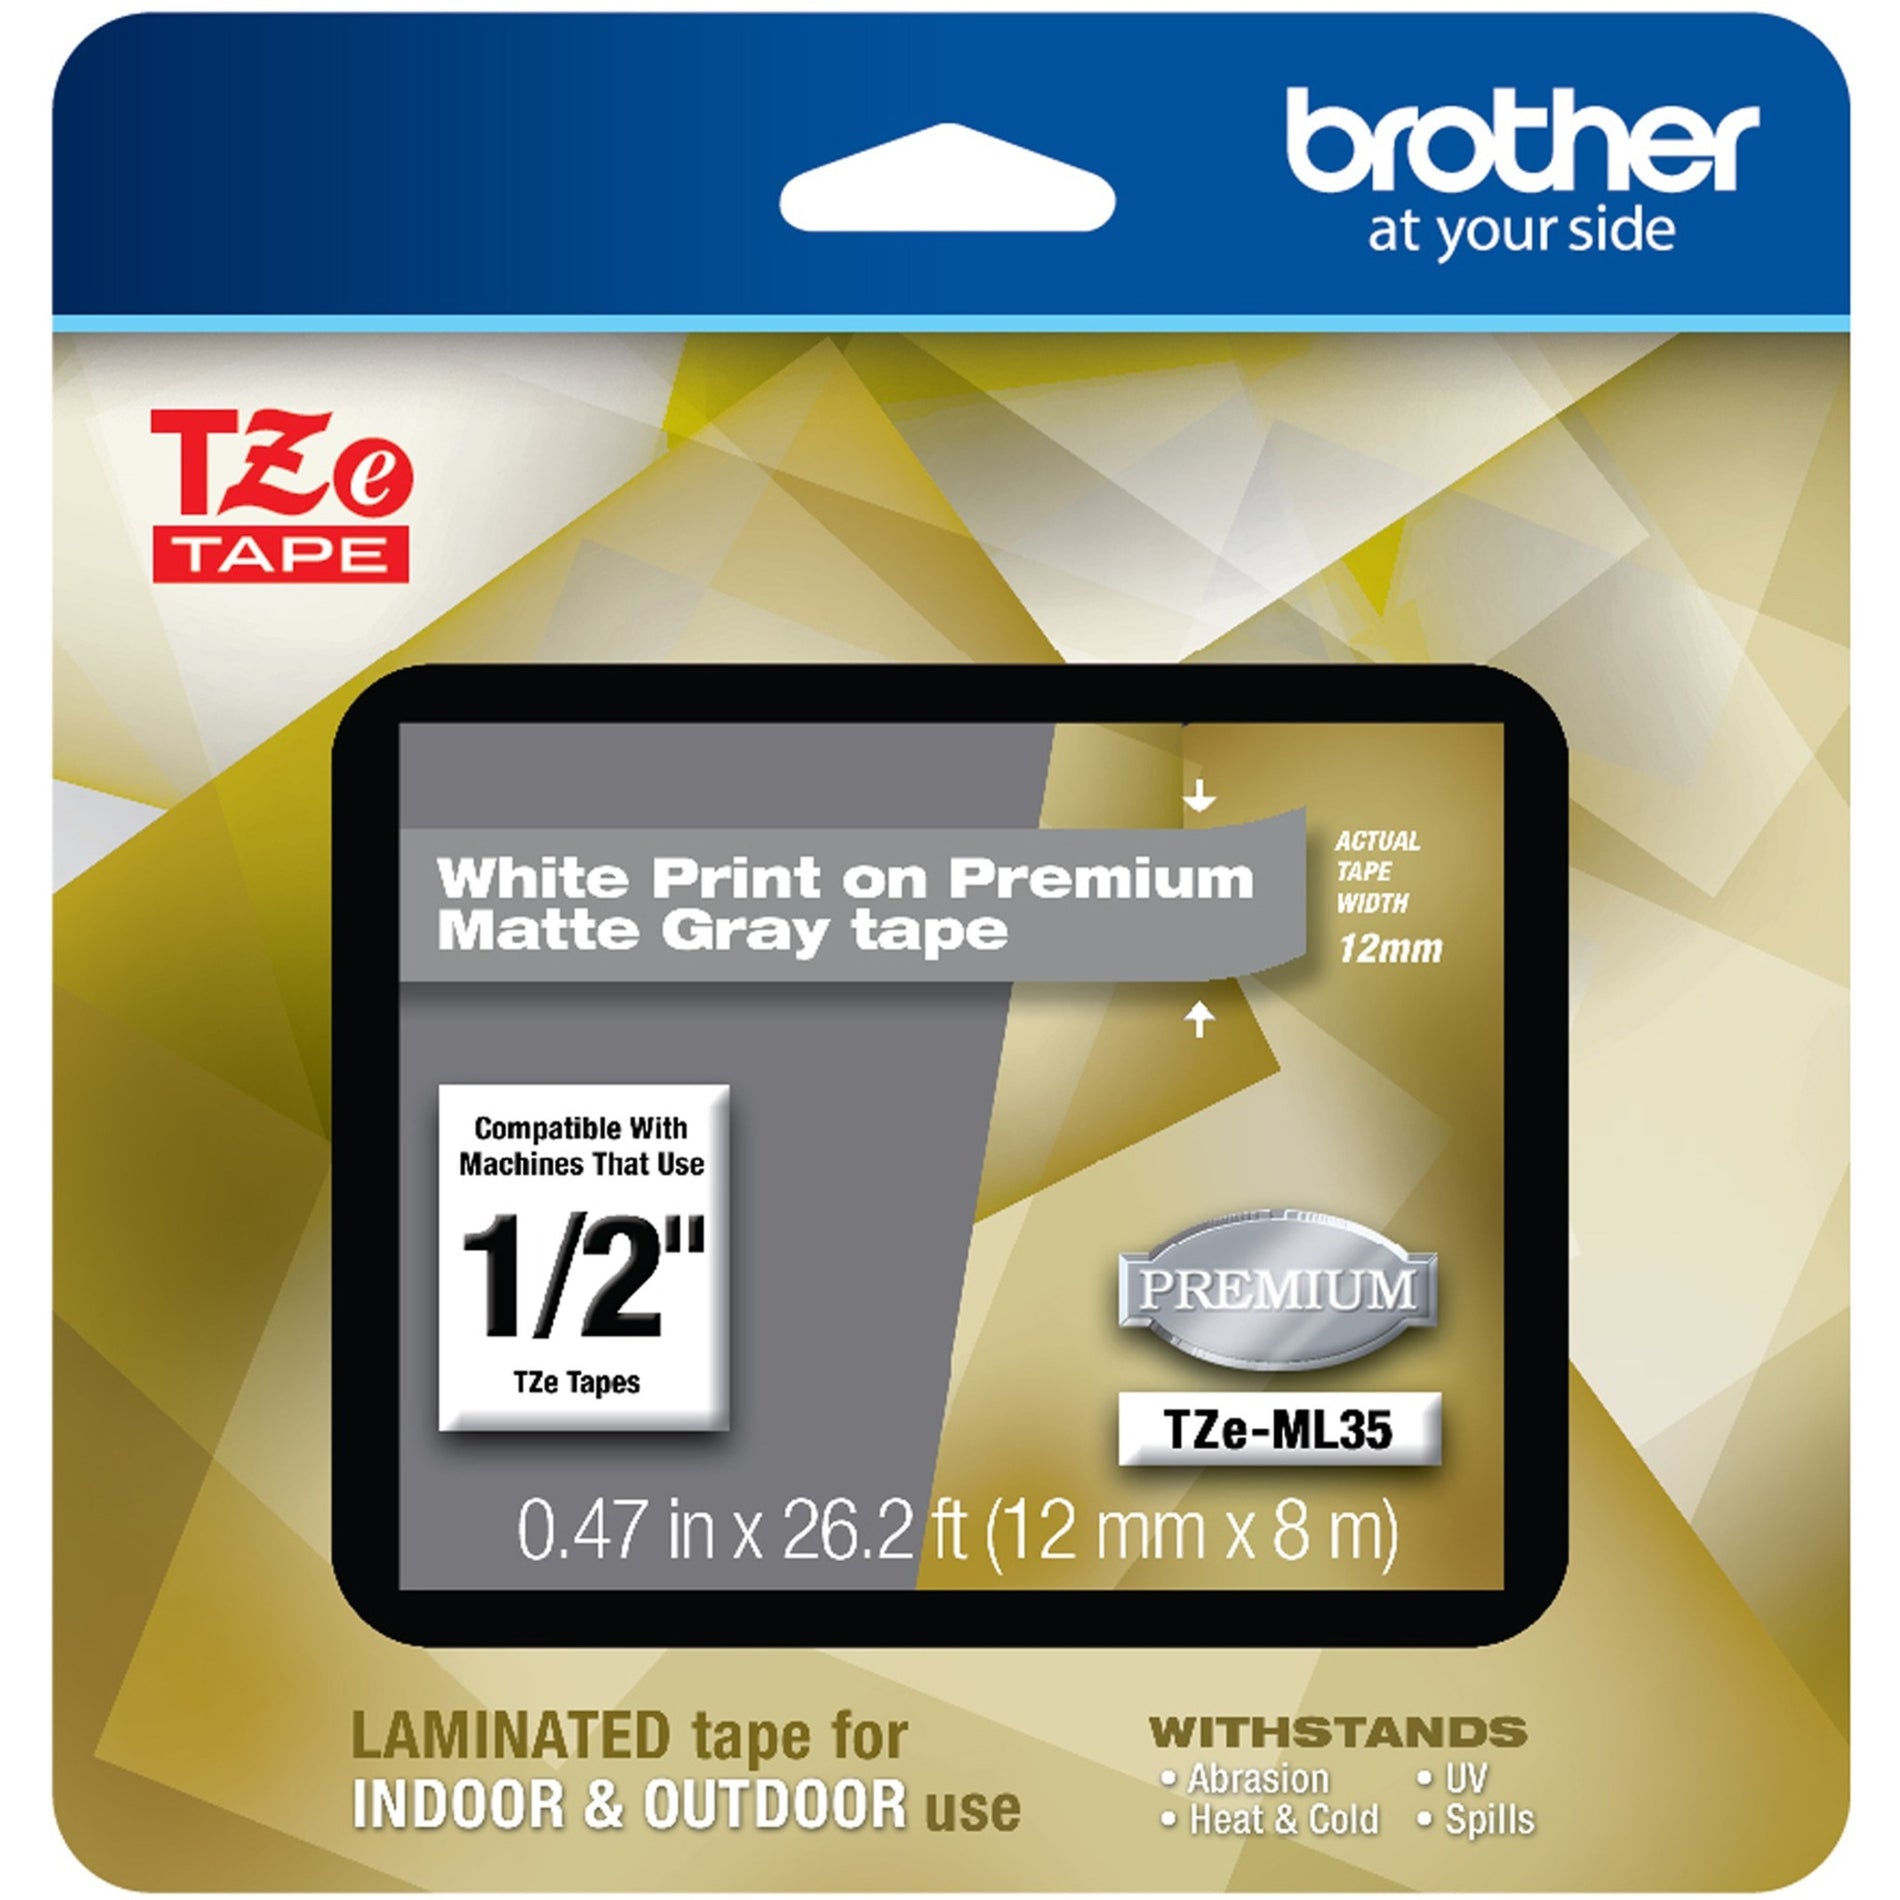 Brother TZEML35 TZe Premium Label Tape, White on Matte Light Gray, 12MM x 8M